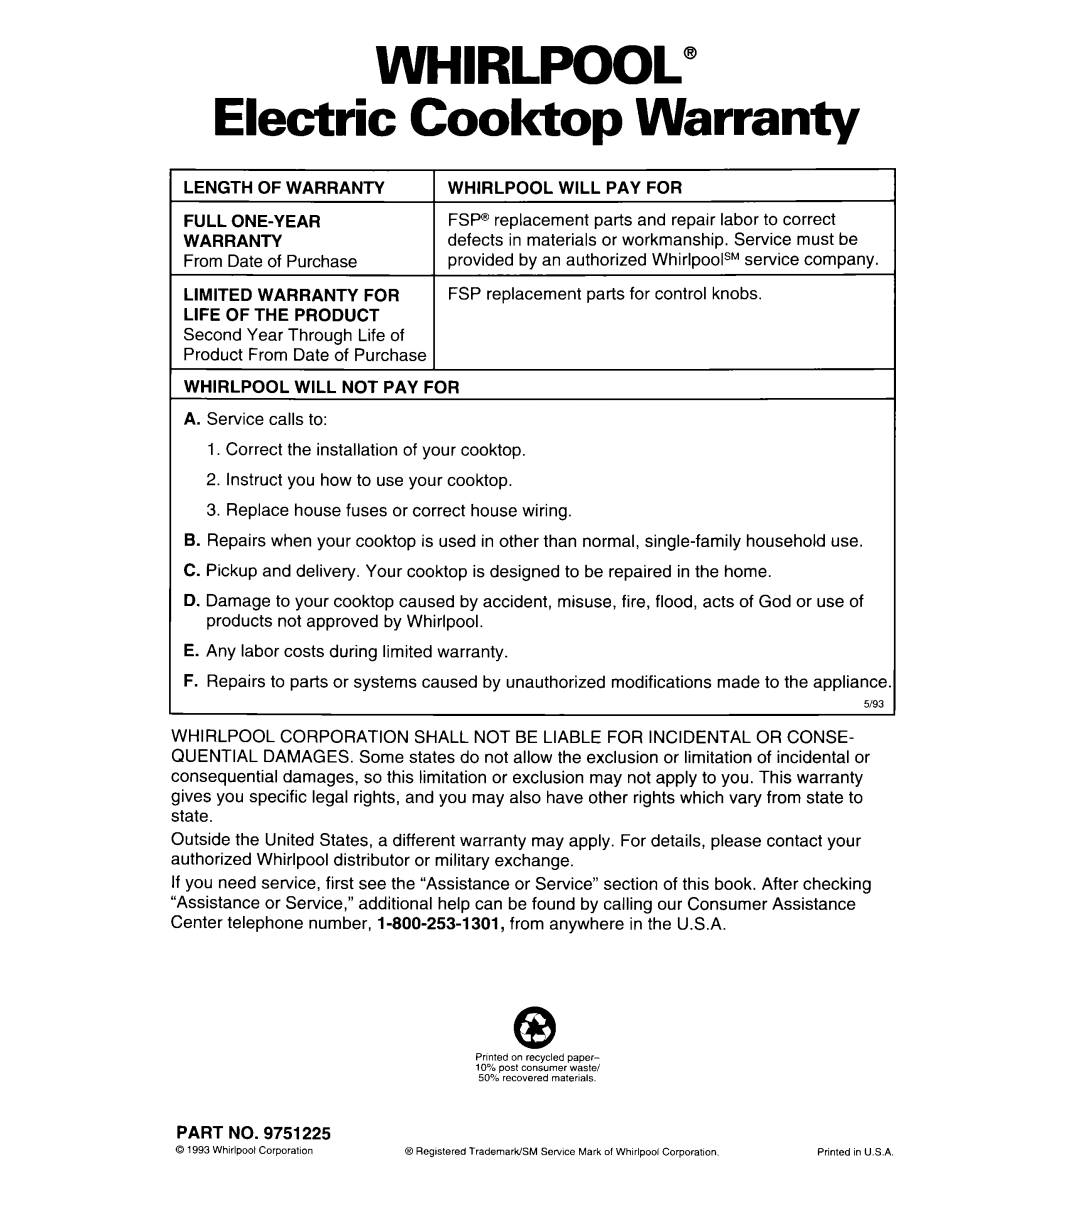 Whirlpool RC8436XA, RC8430XA warranty WHIRLPOOL” Electric Cooktop Warranty 